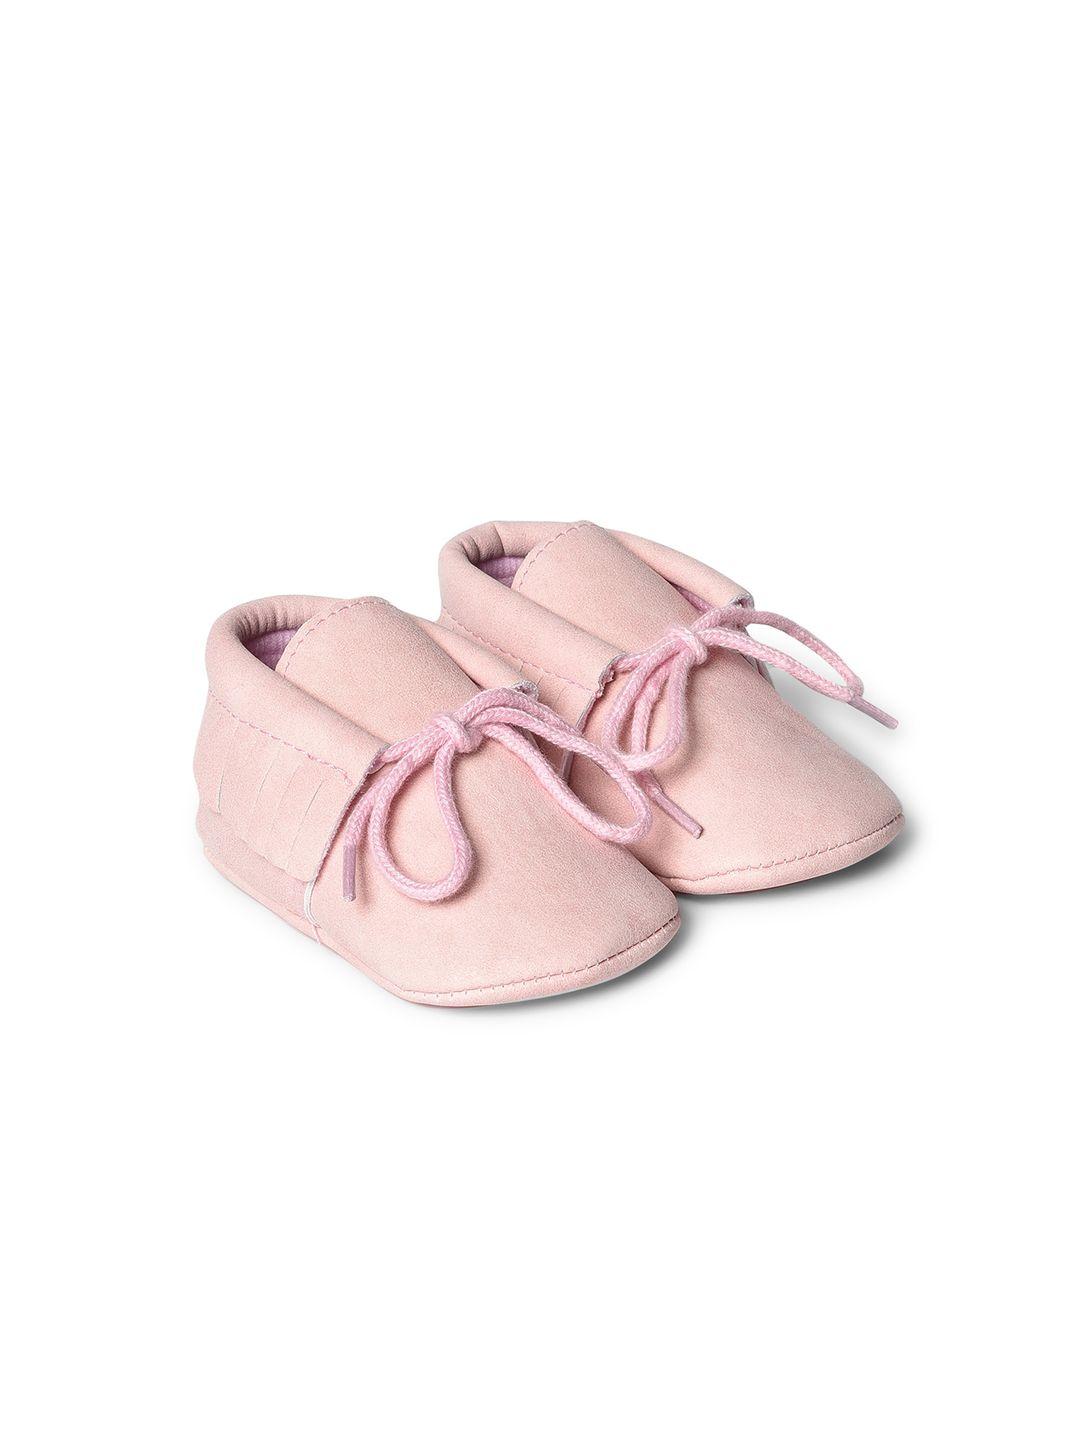 miarcus infants pink solid booties